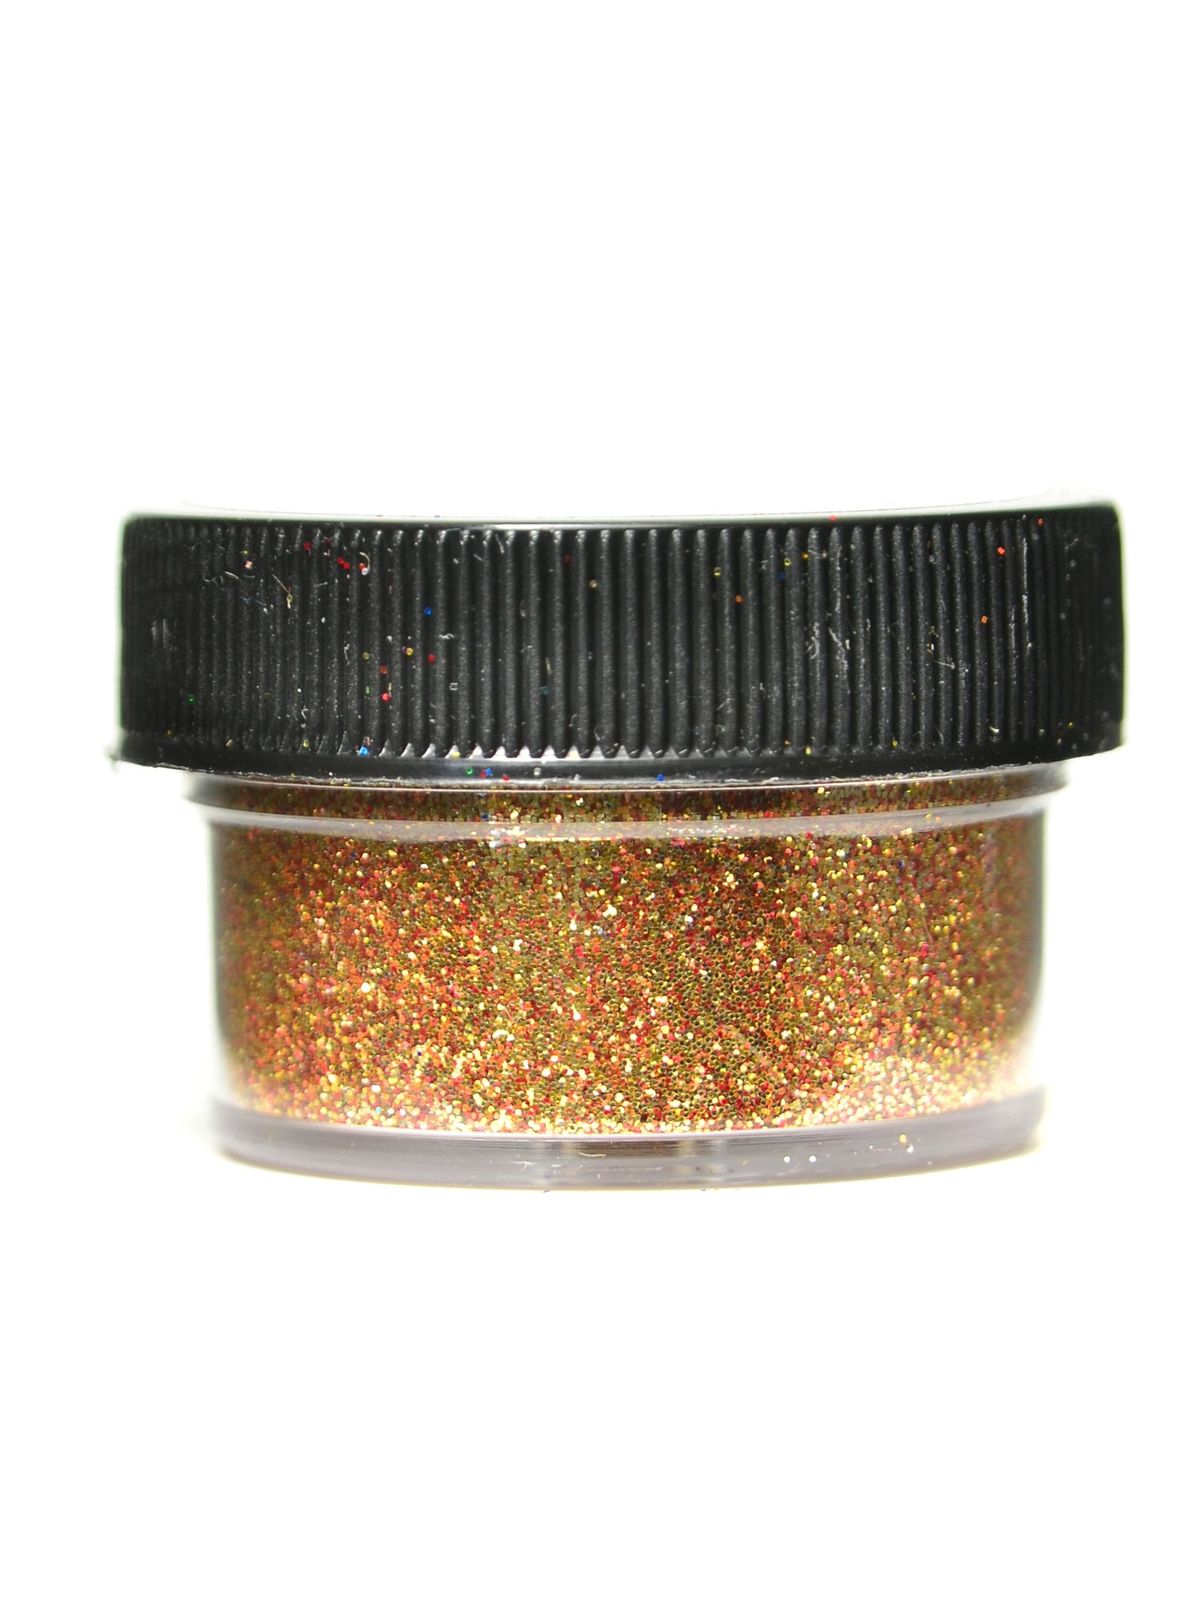 Ultrafine Opaque Glitter Inca Gold 1 2 Oz. Jar